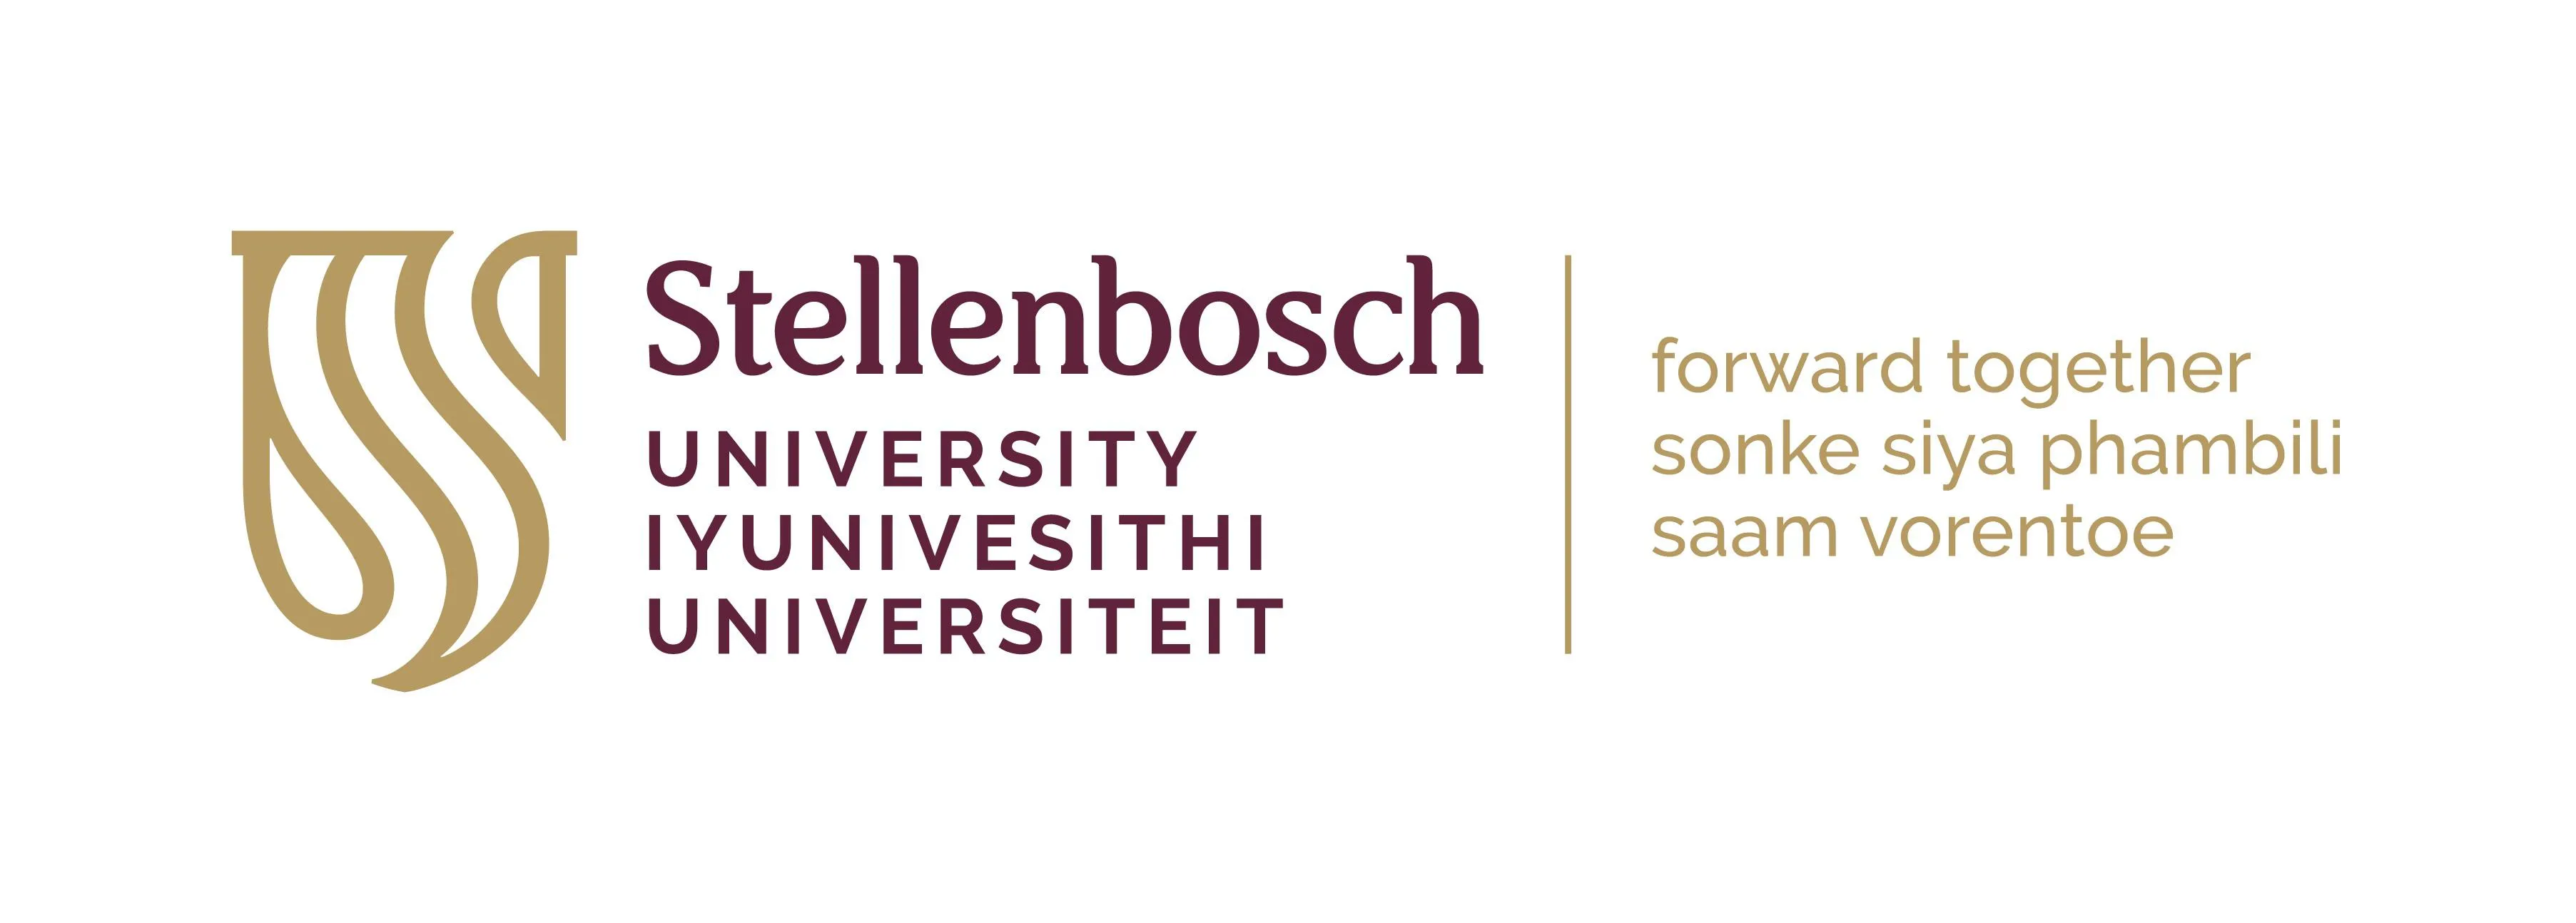 Stellenbosch University logo